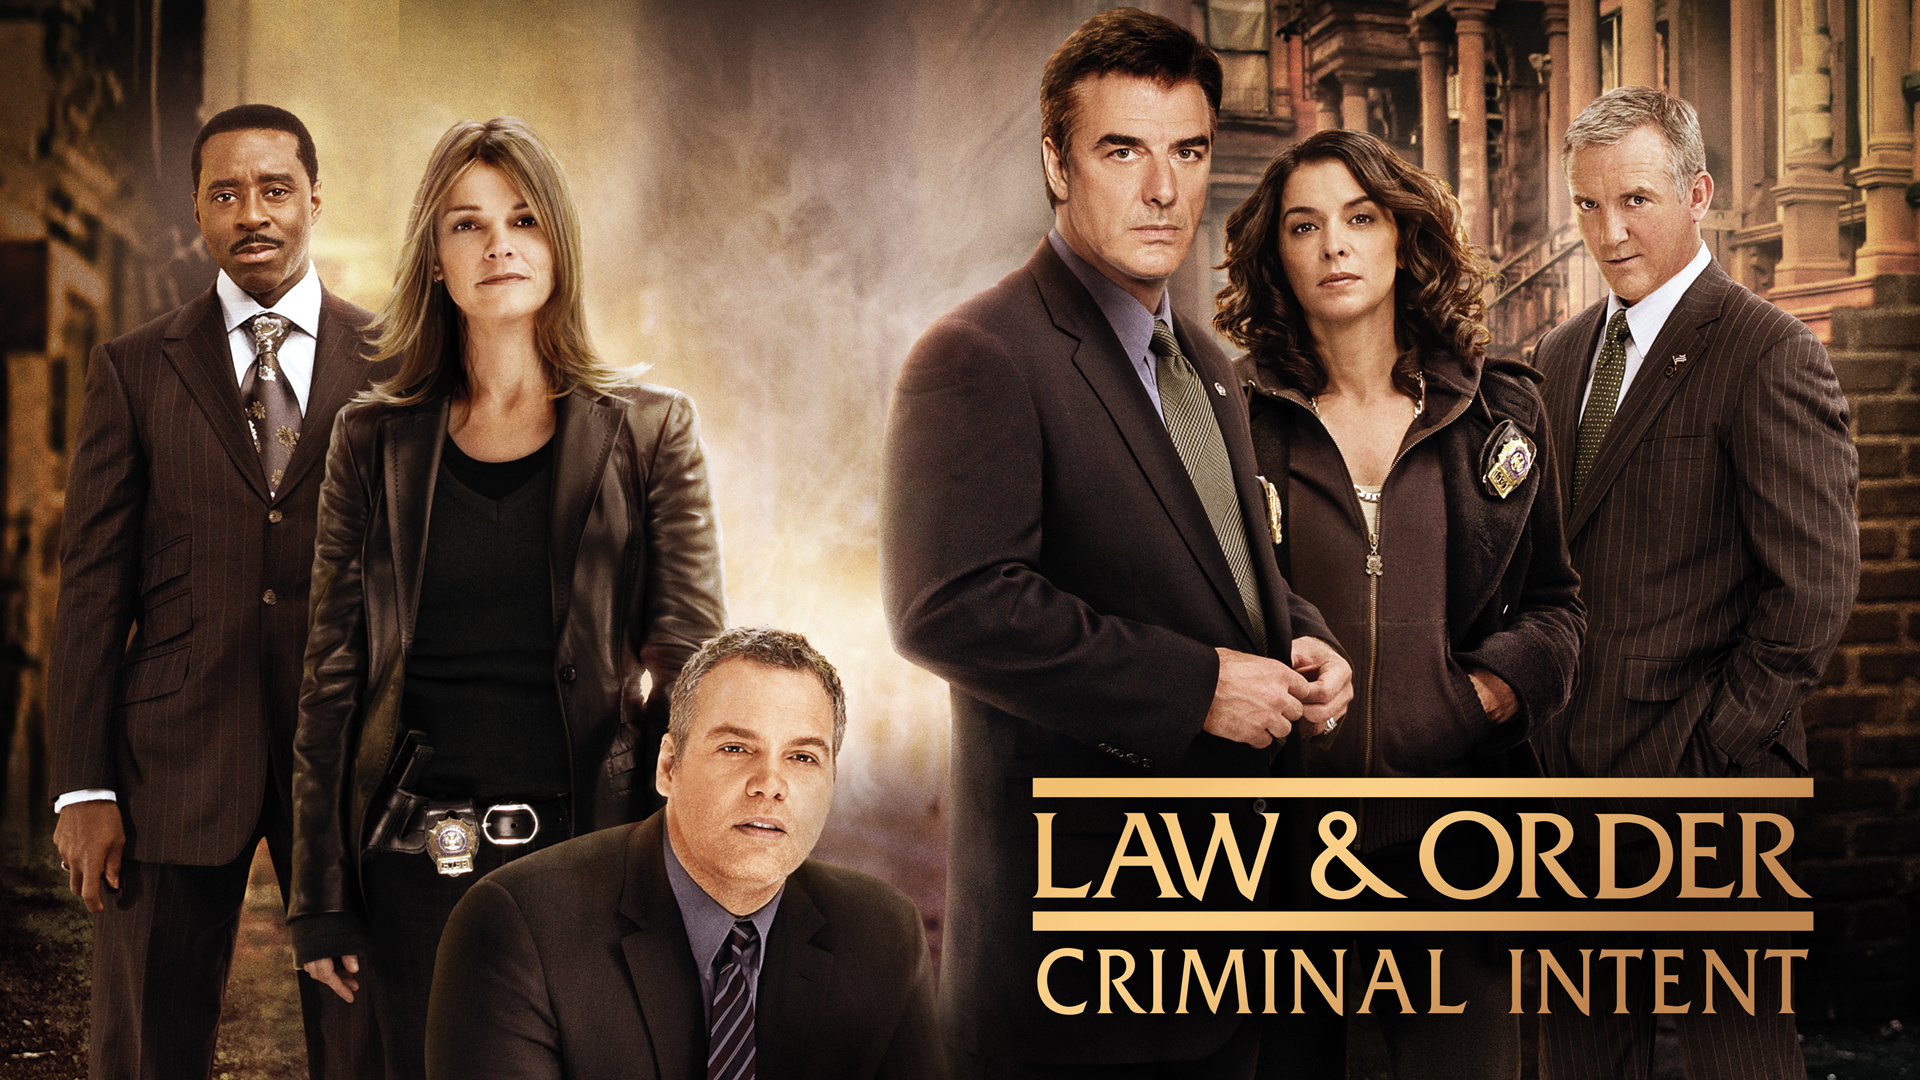 Watch Law & Order: Criminal Intent Episodes - NBC.com